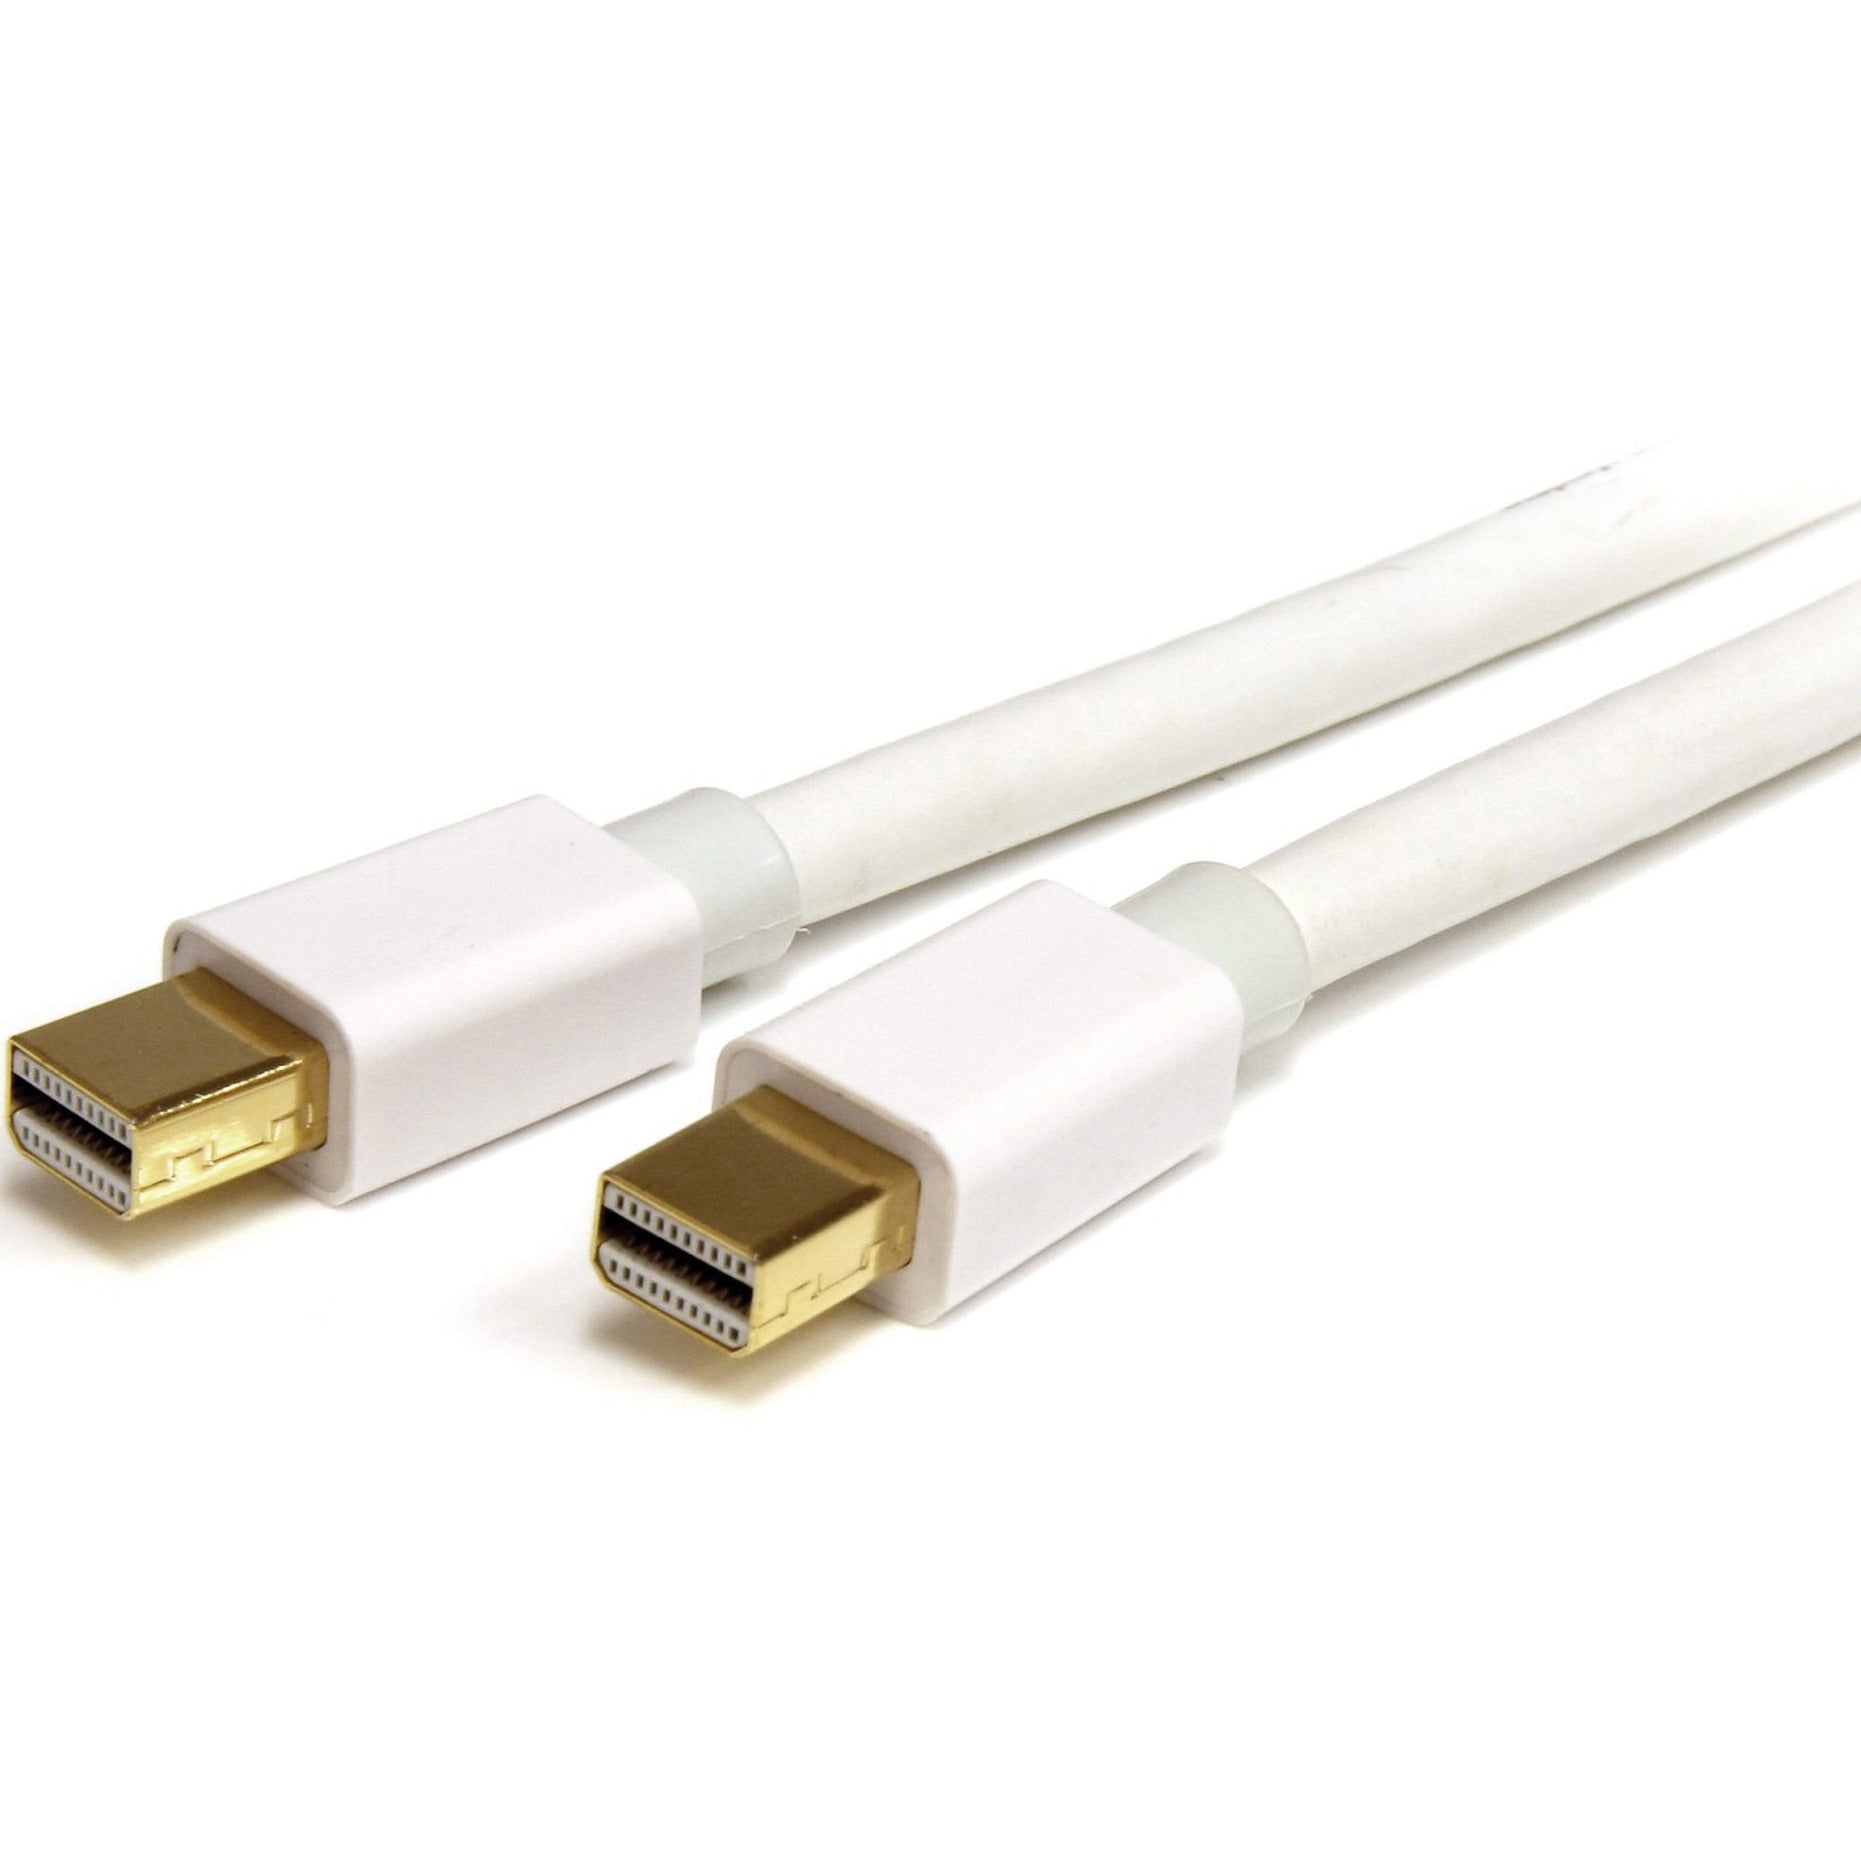 StarTech.com MDPMM3MW 3m White Mini DisplayPort Cable - M/M, High Quality, Lifetime Warranty [Discontinued]